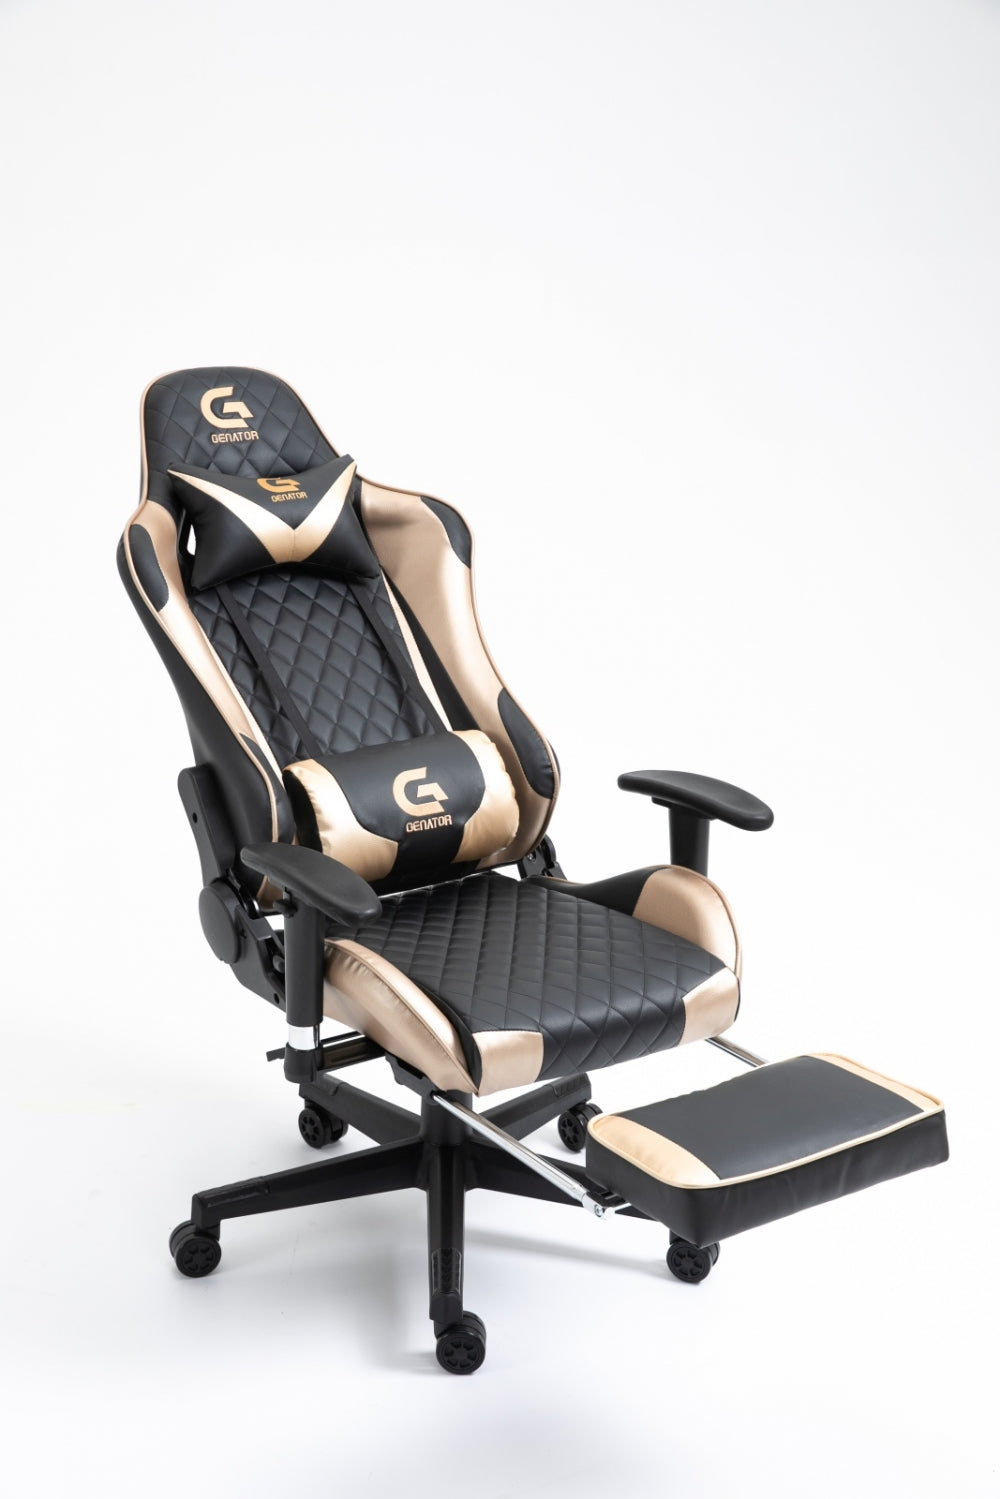 Scaun gaming Racing Lux, masaj in perna lombara, suport picioare, funcție sezlong,Negru/Auriu